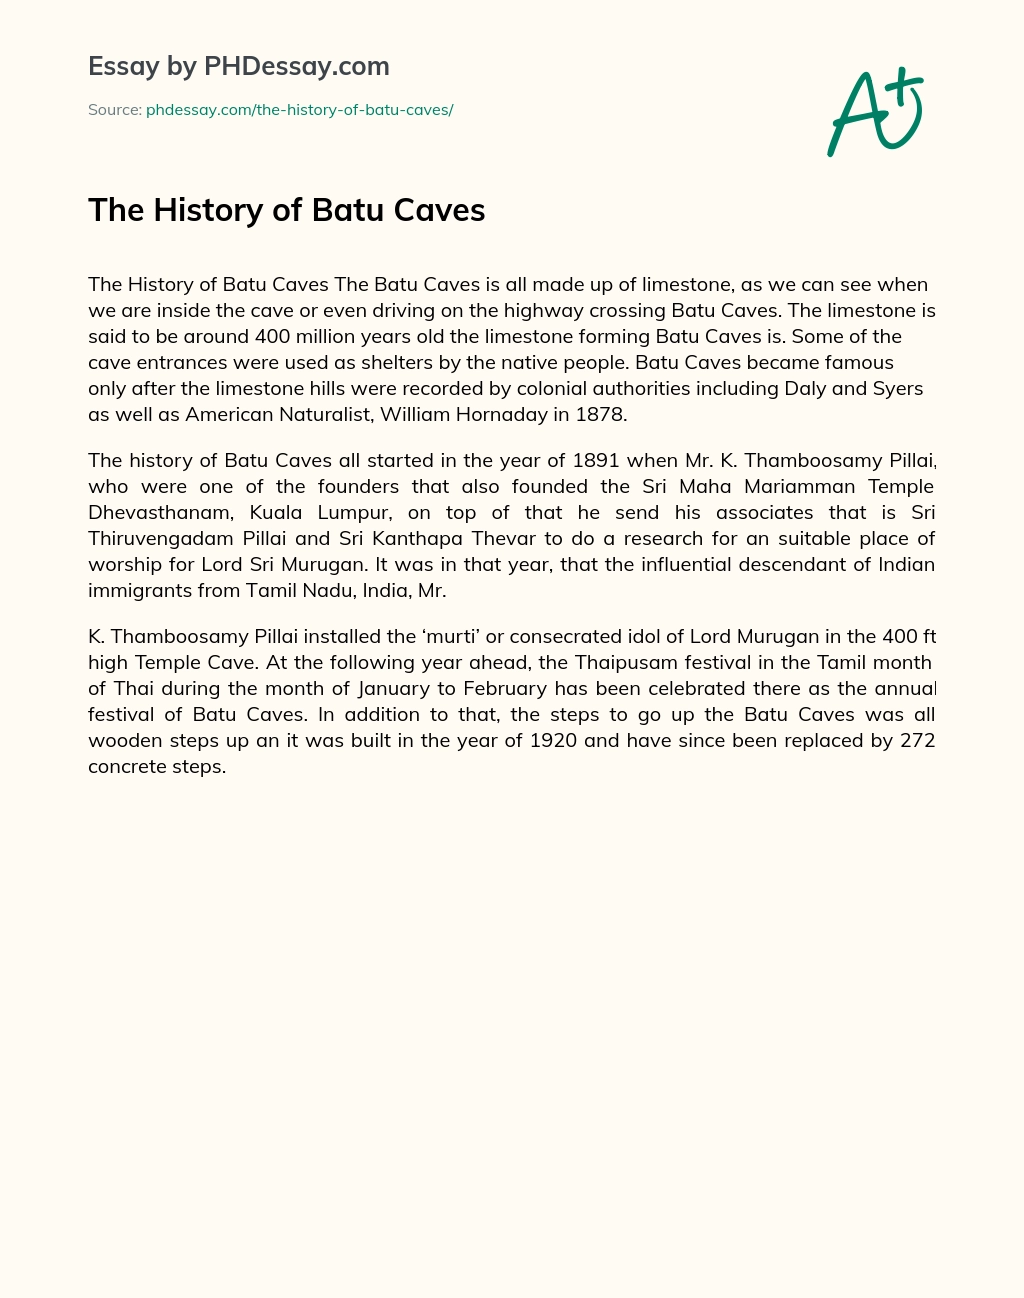 The History of Batu Caves essay